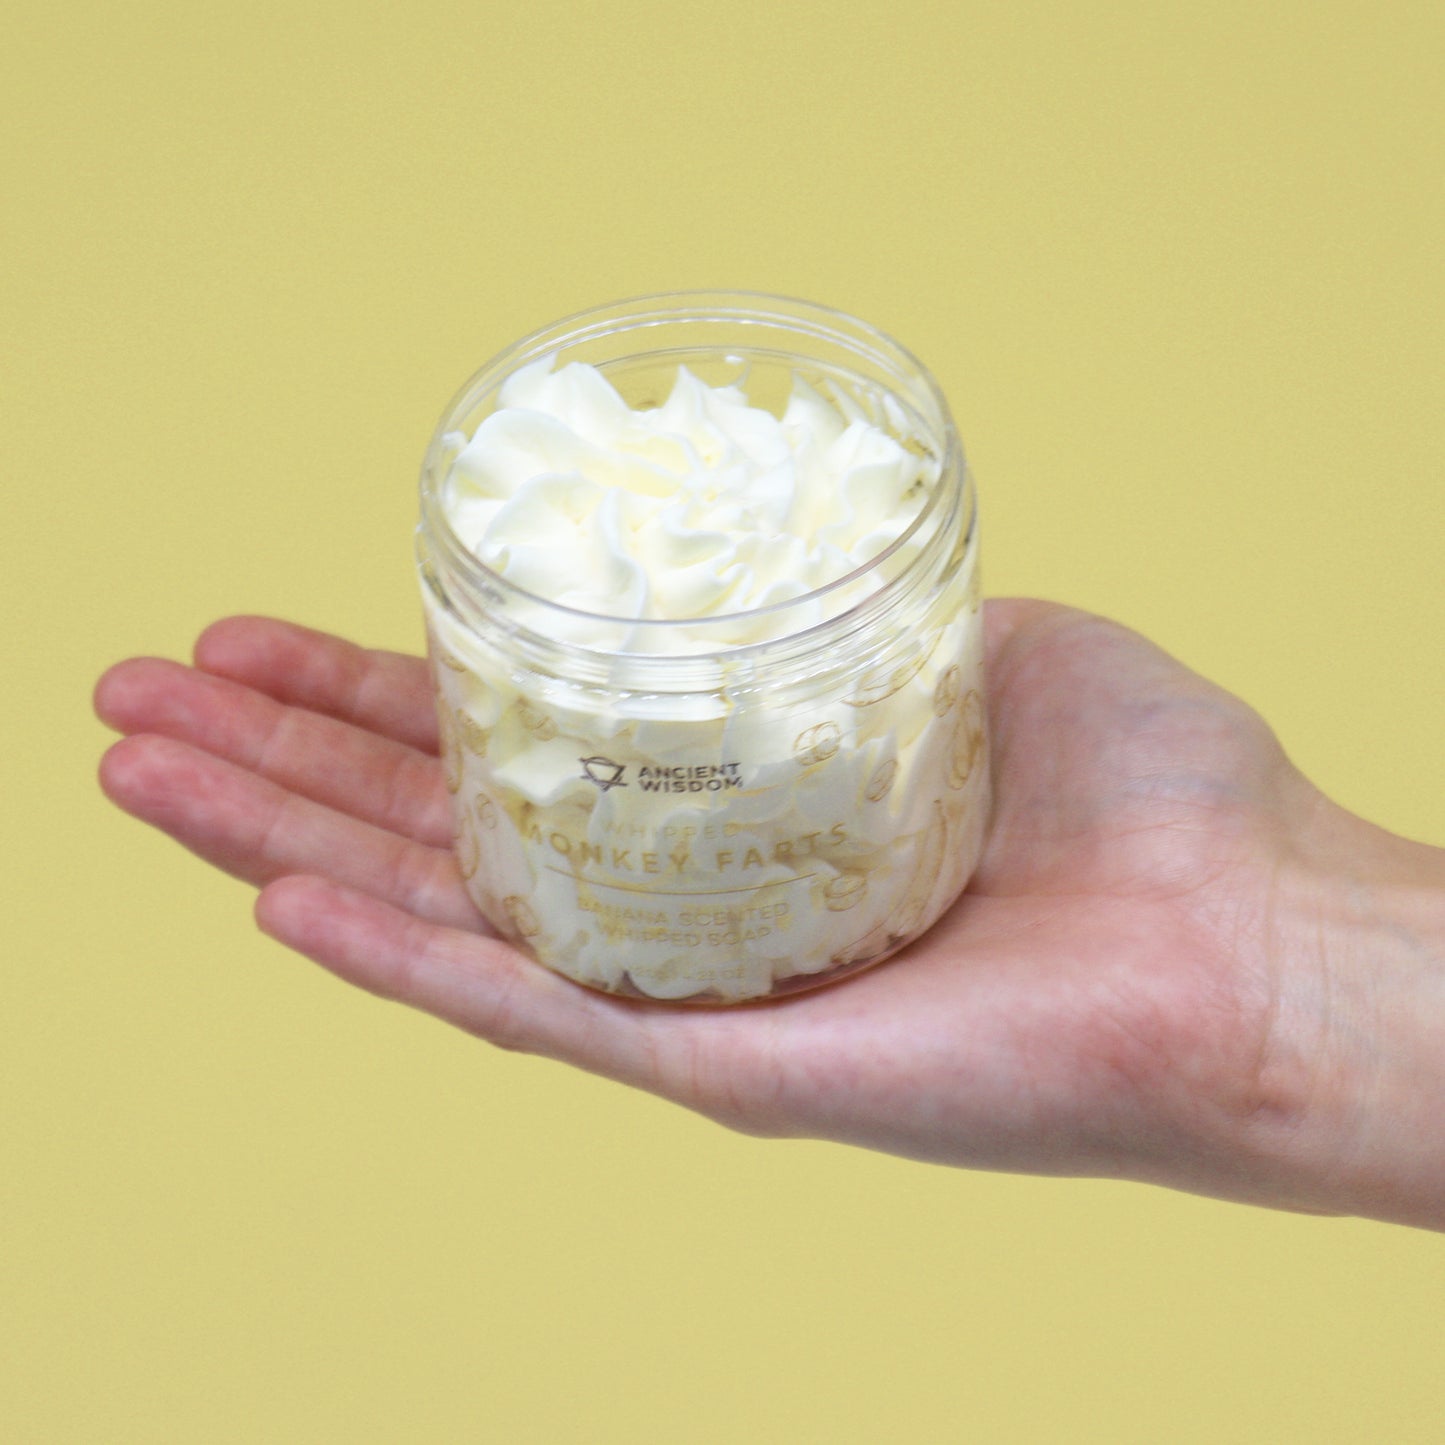 Banana Whipped Cream Soap 120g - ScentiMelti Wax Melts